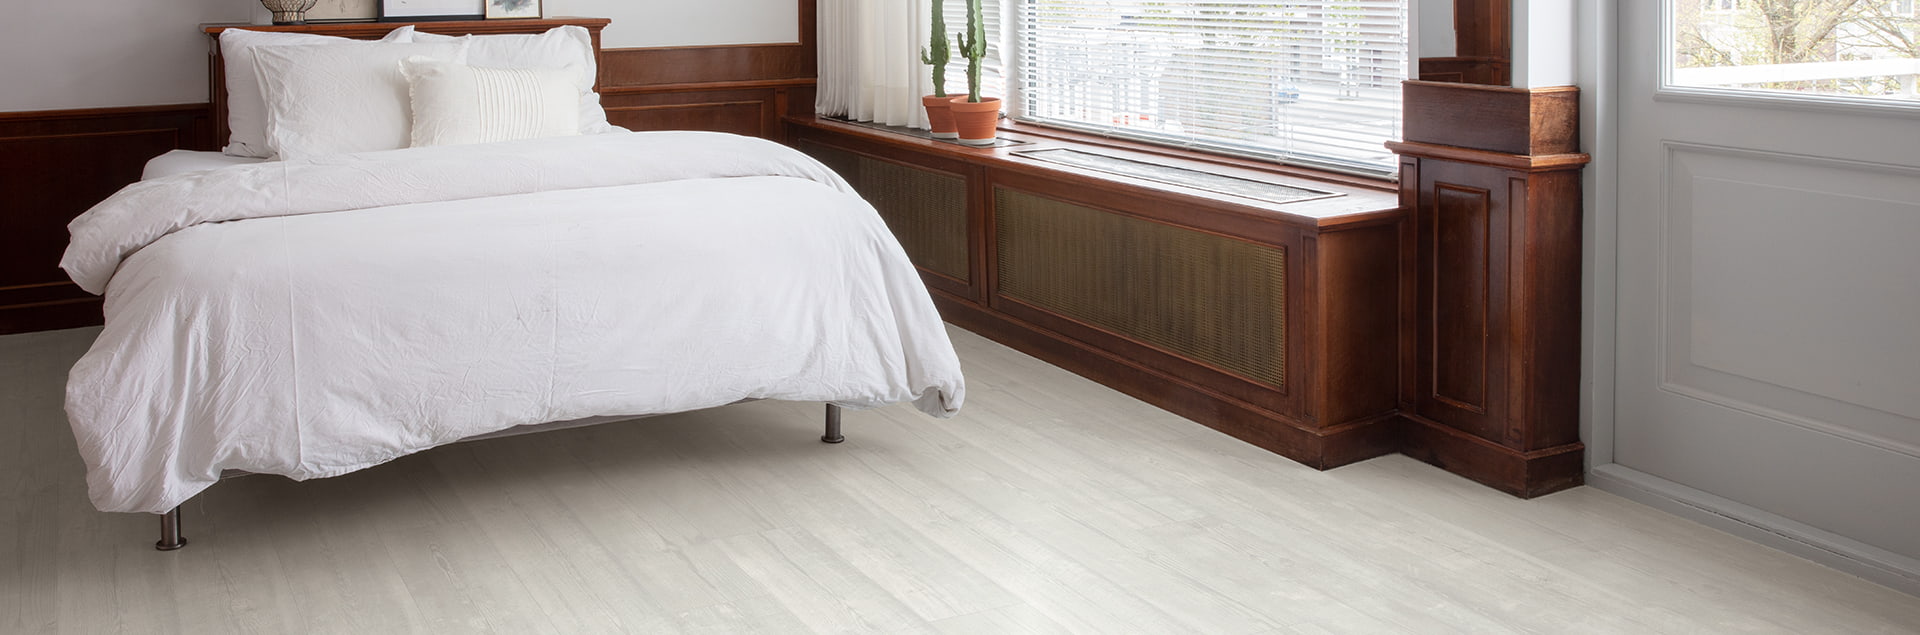 Bright bedroom with white vinyl flooring